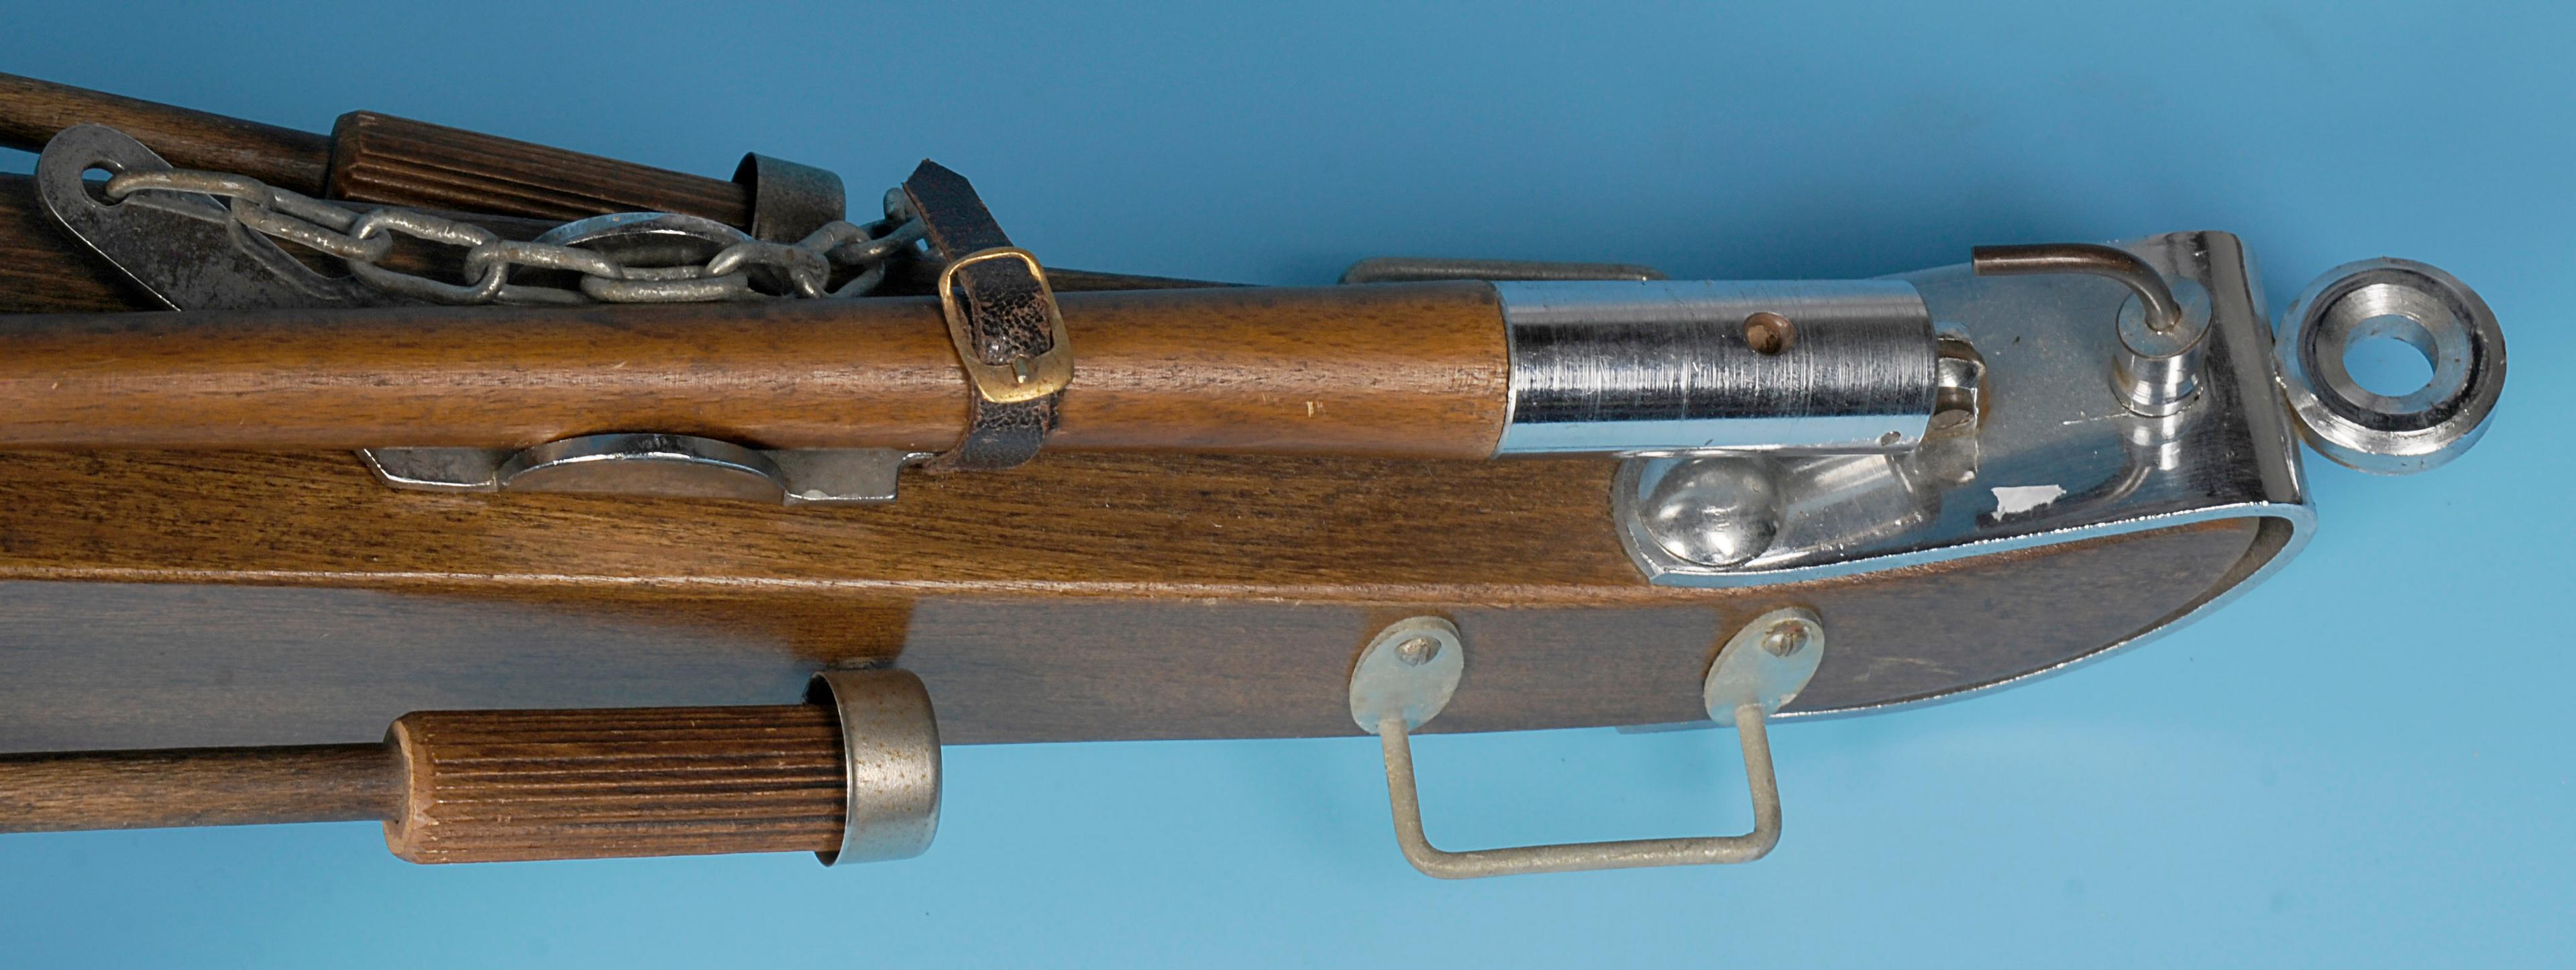 .69 caliber Black Powder Shootable Napolean Cannon Model (LCC)